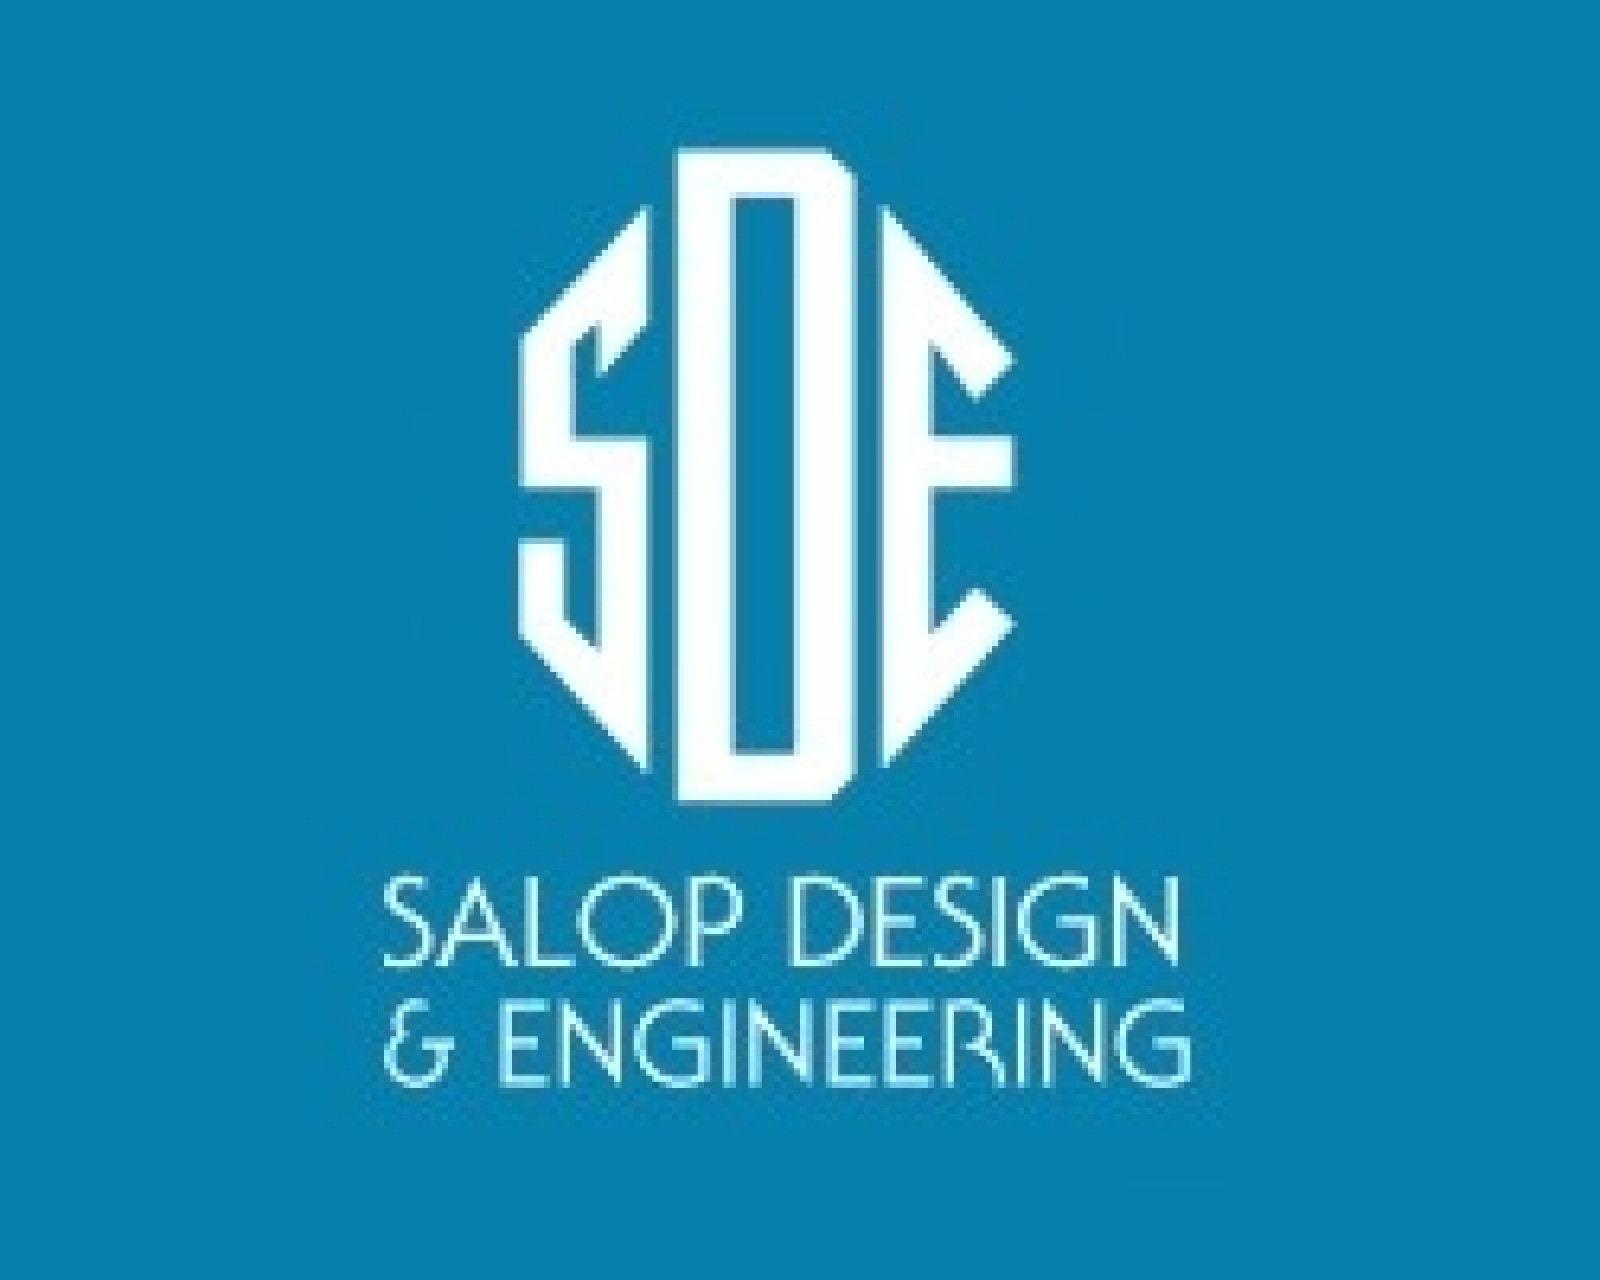 'Salop Design & Engineering Ltd - Awards Finalist'